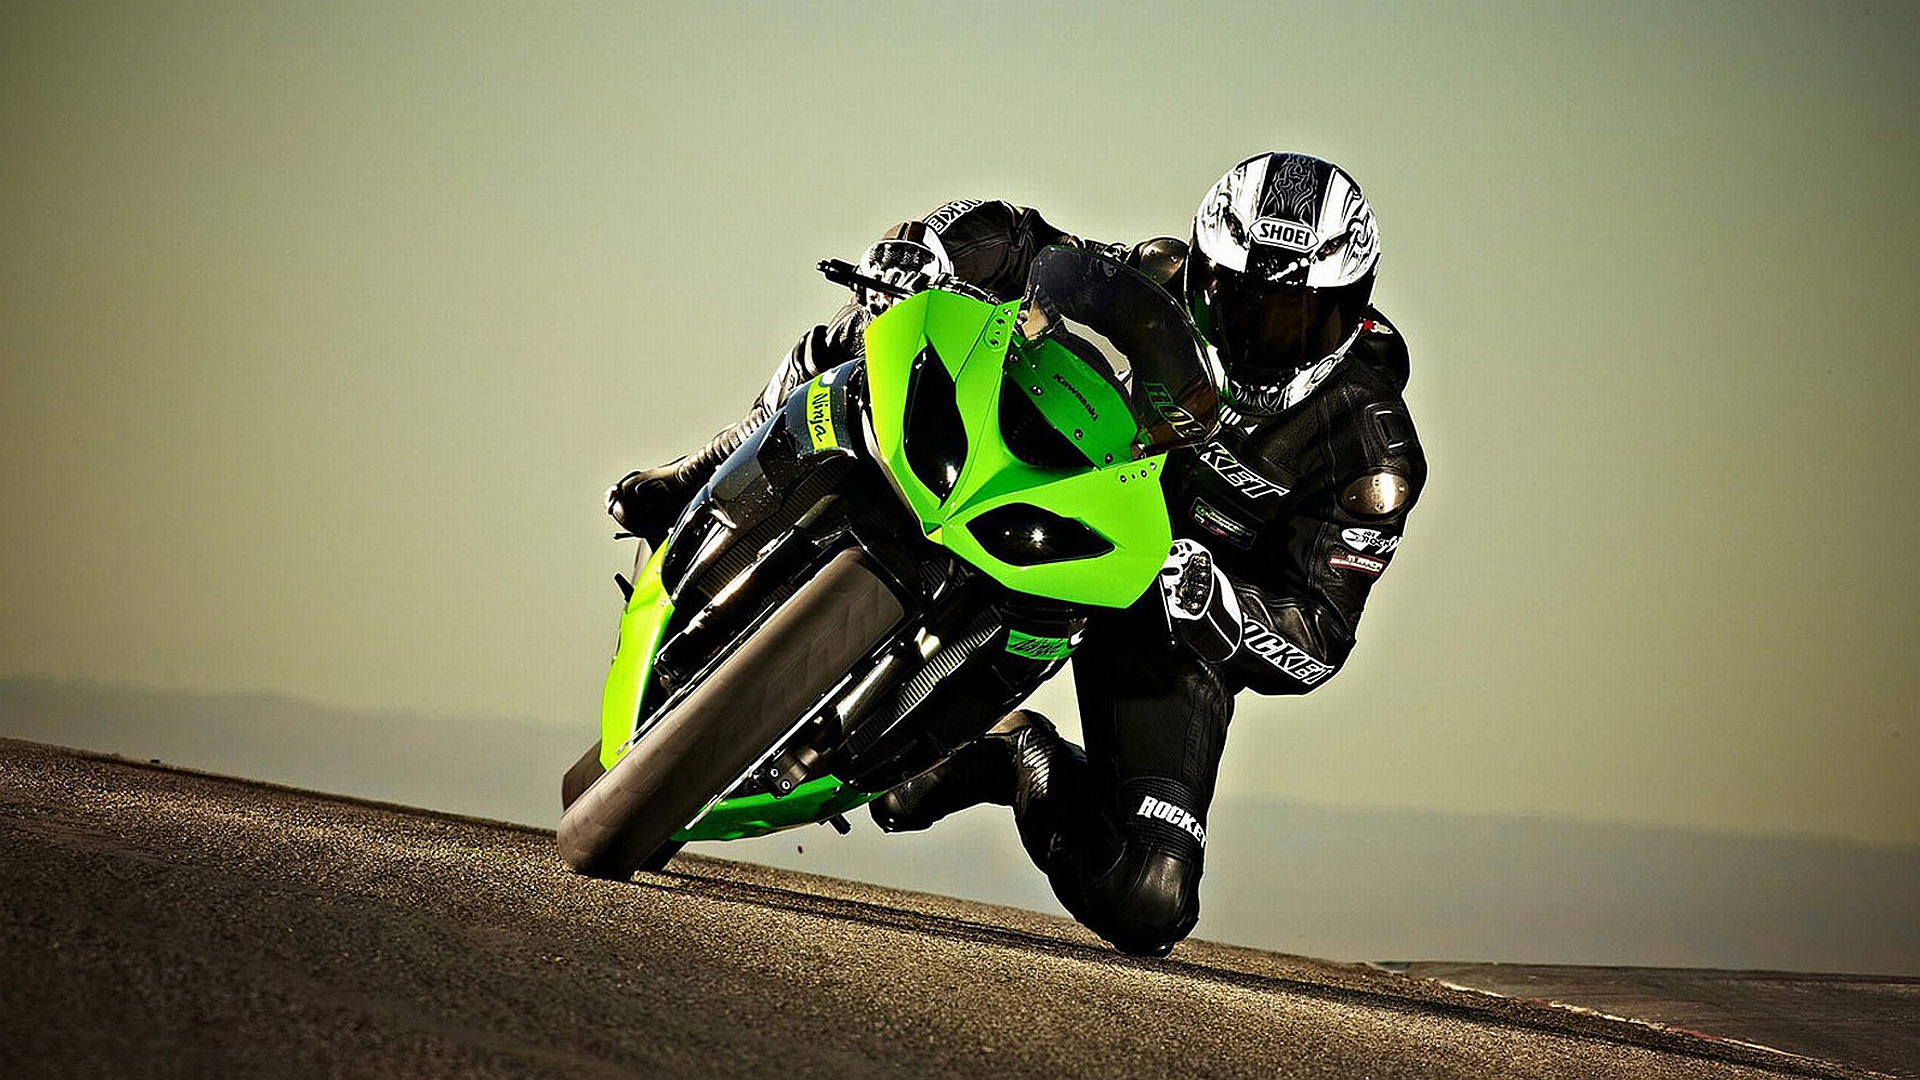 motorrad wallpaper,motorcycle,motorcycle racer,superbike racing,motorcycling,vehicle